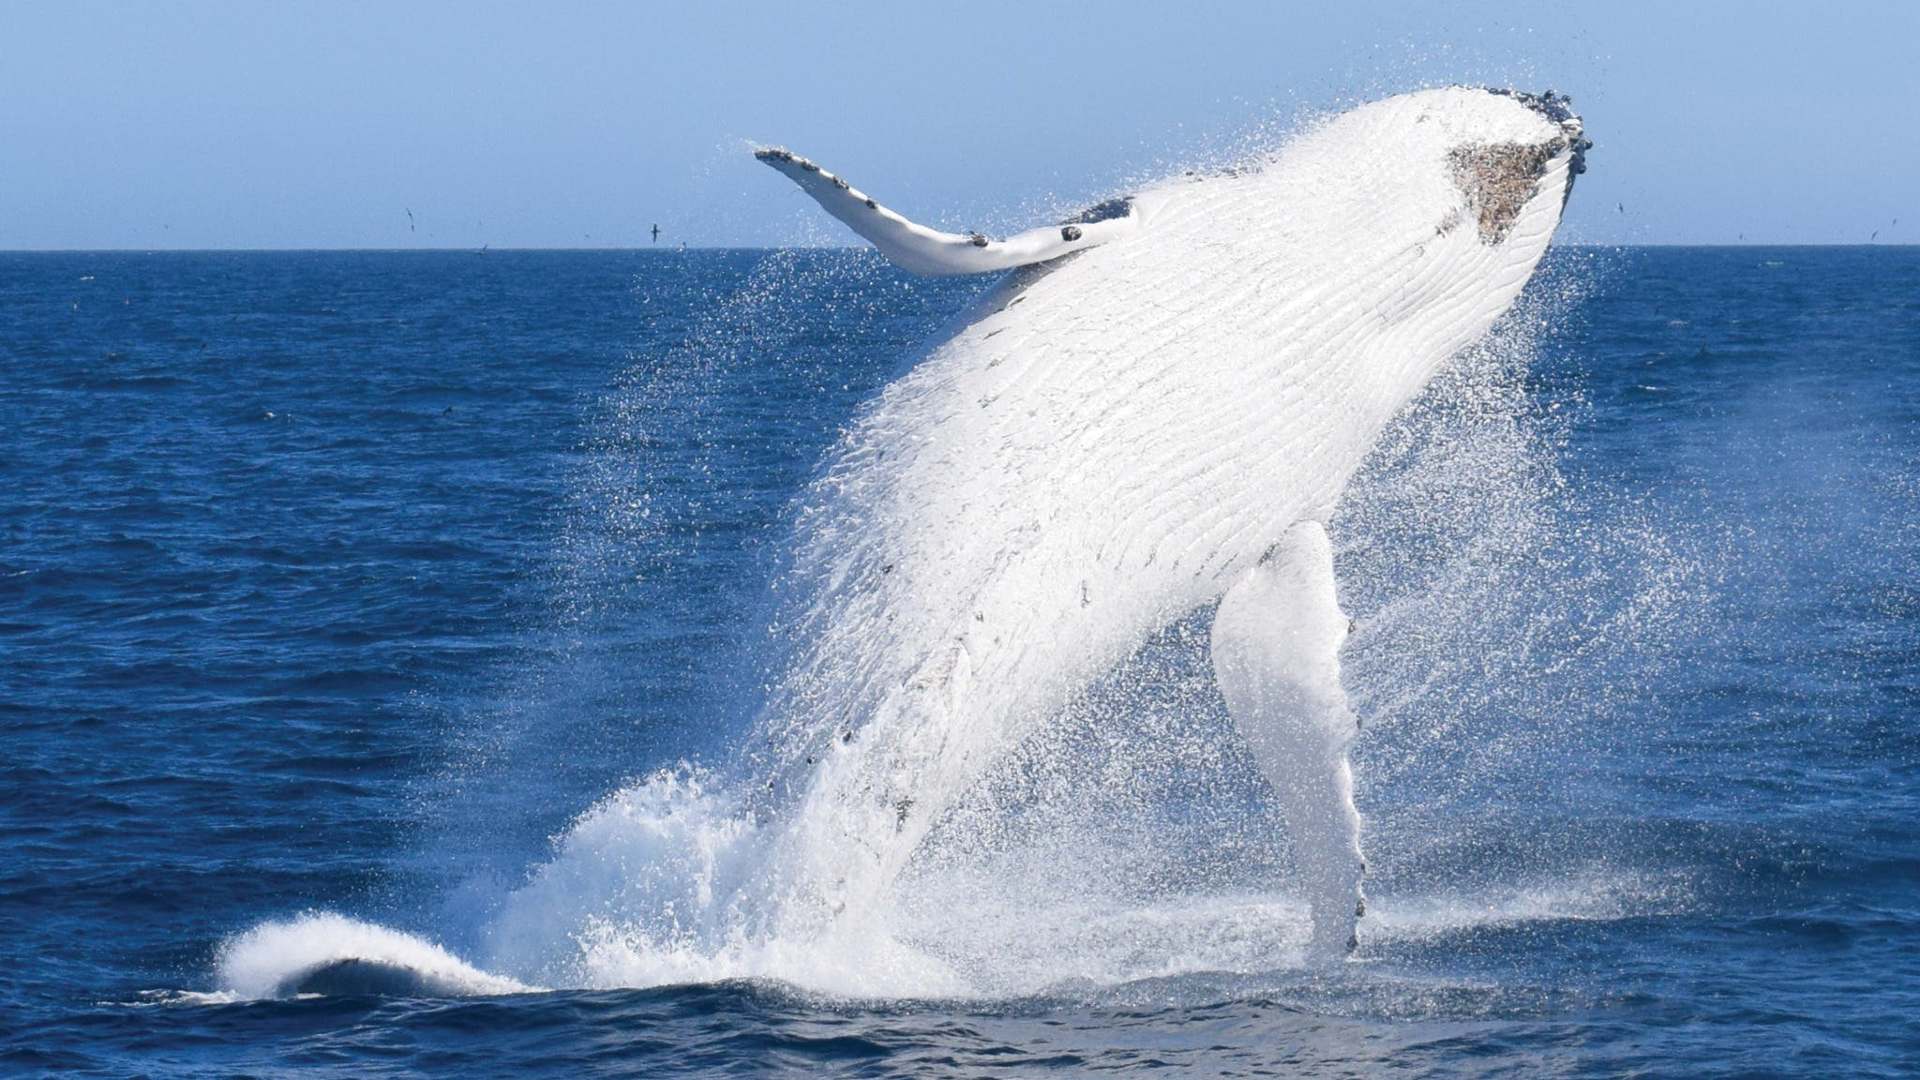 best whale watching spots australia - bass coast